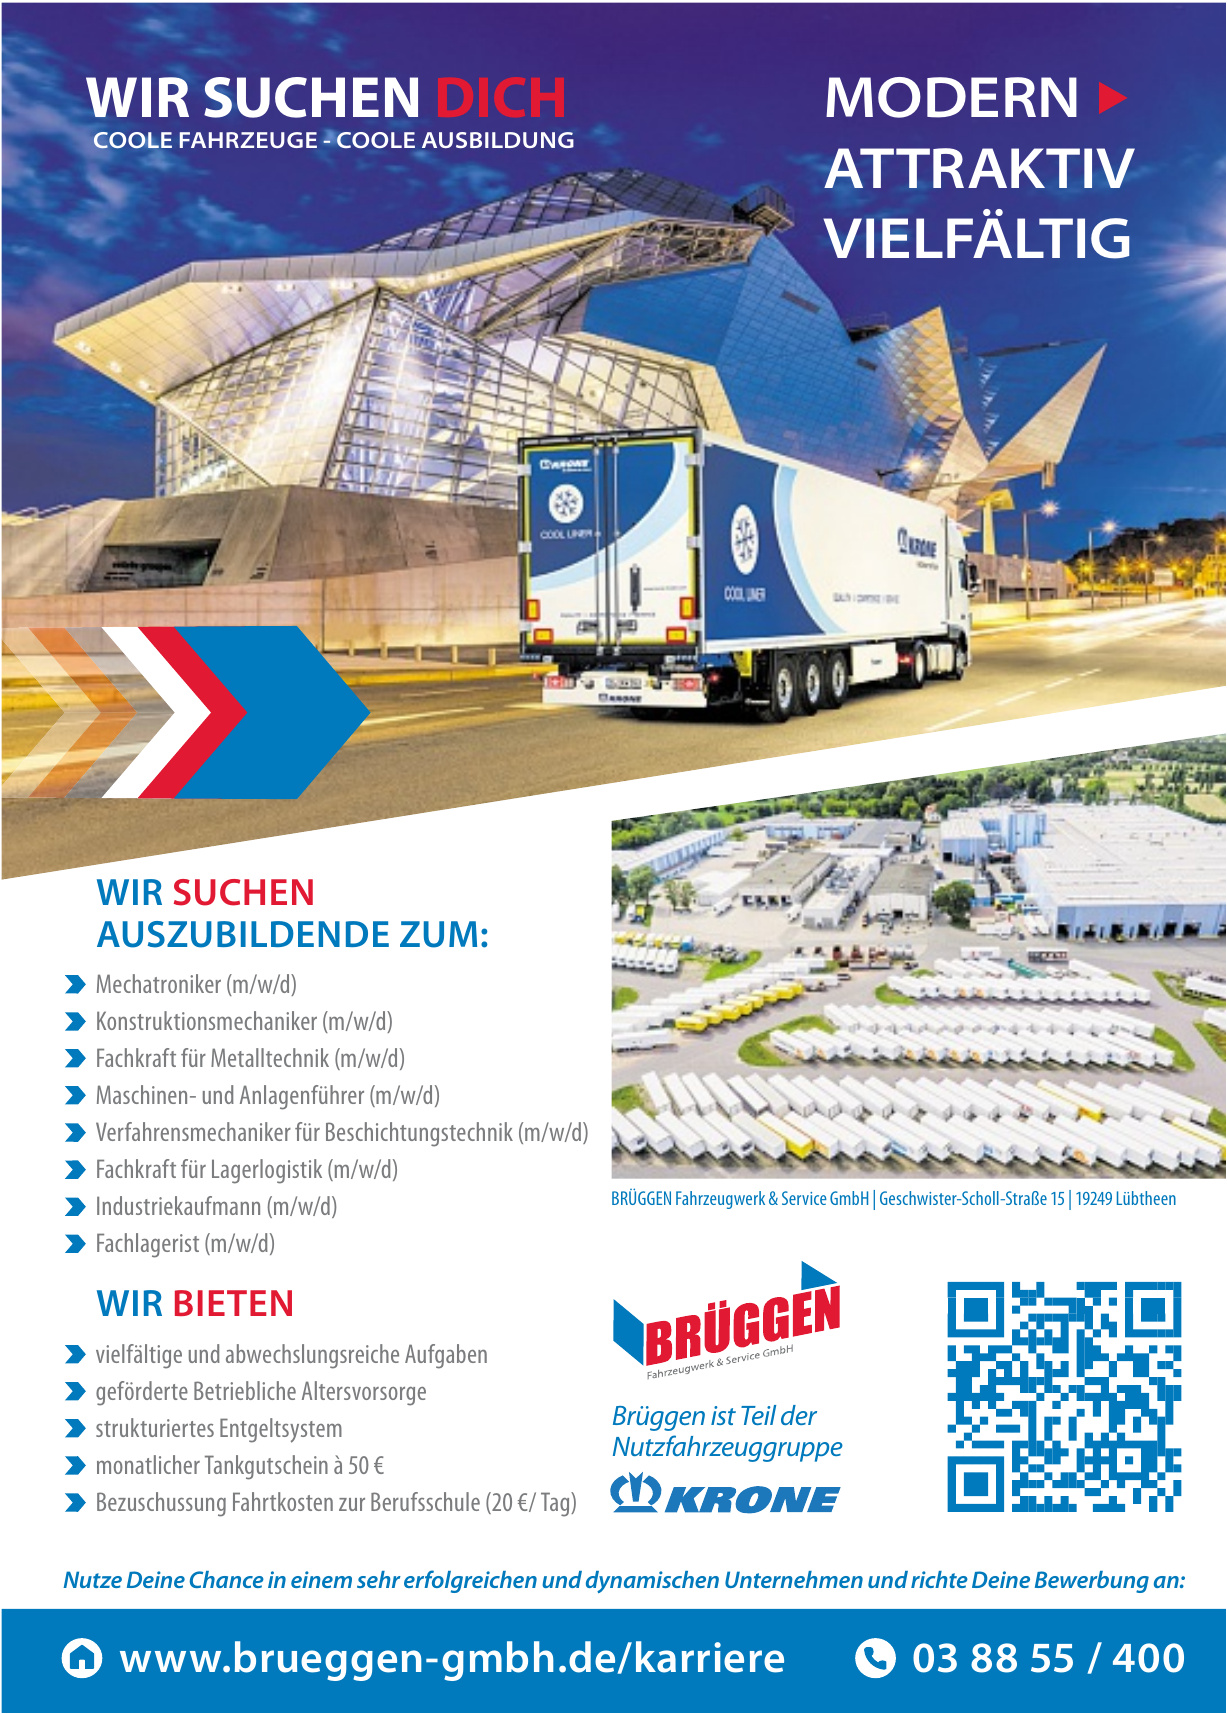 Brüggen GmbH